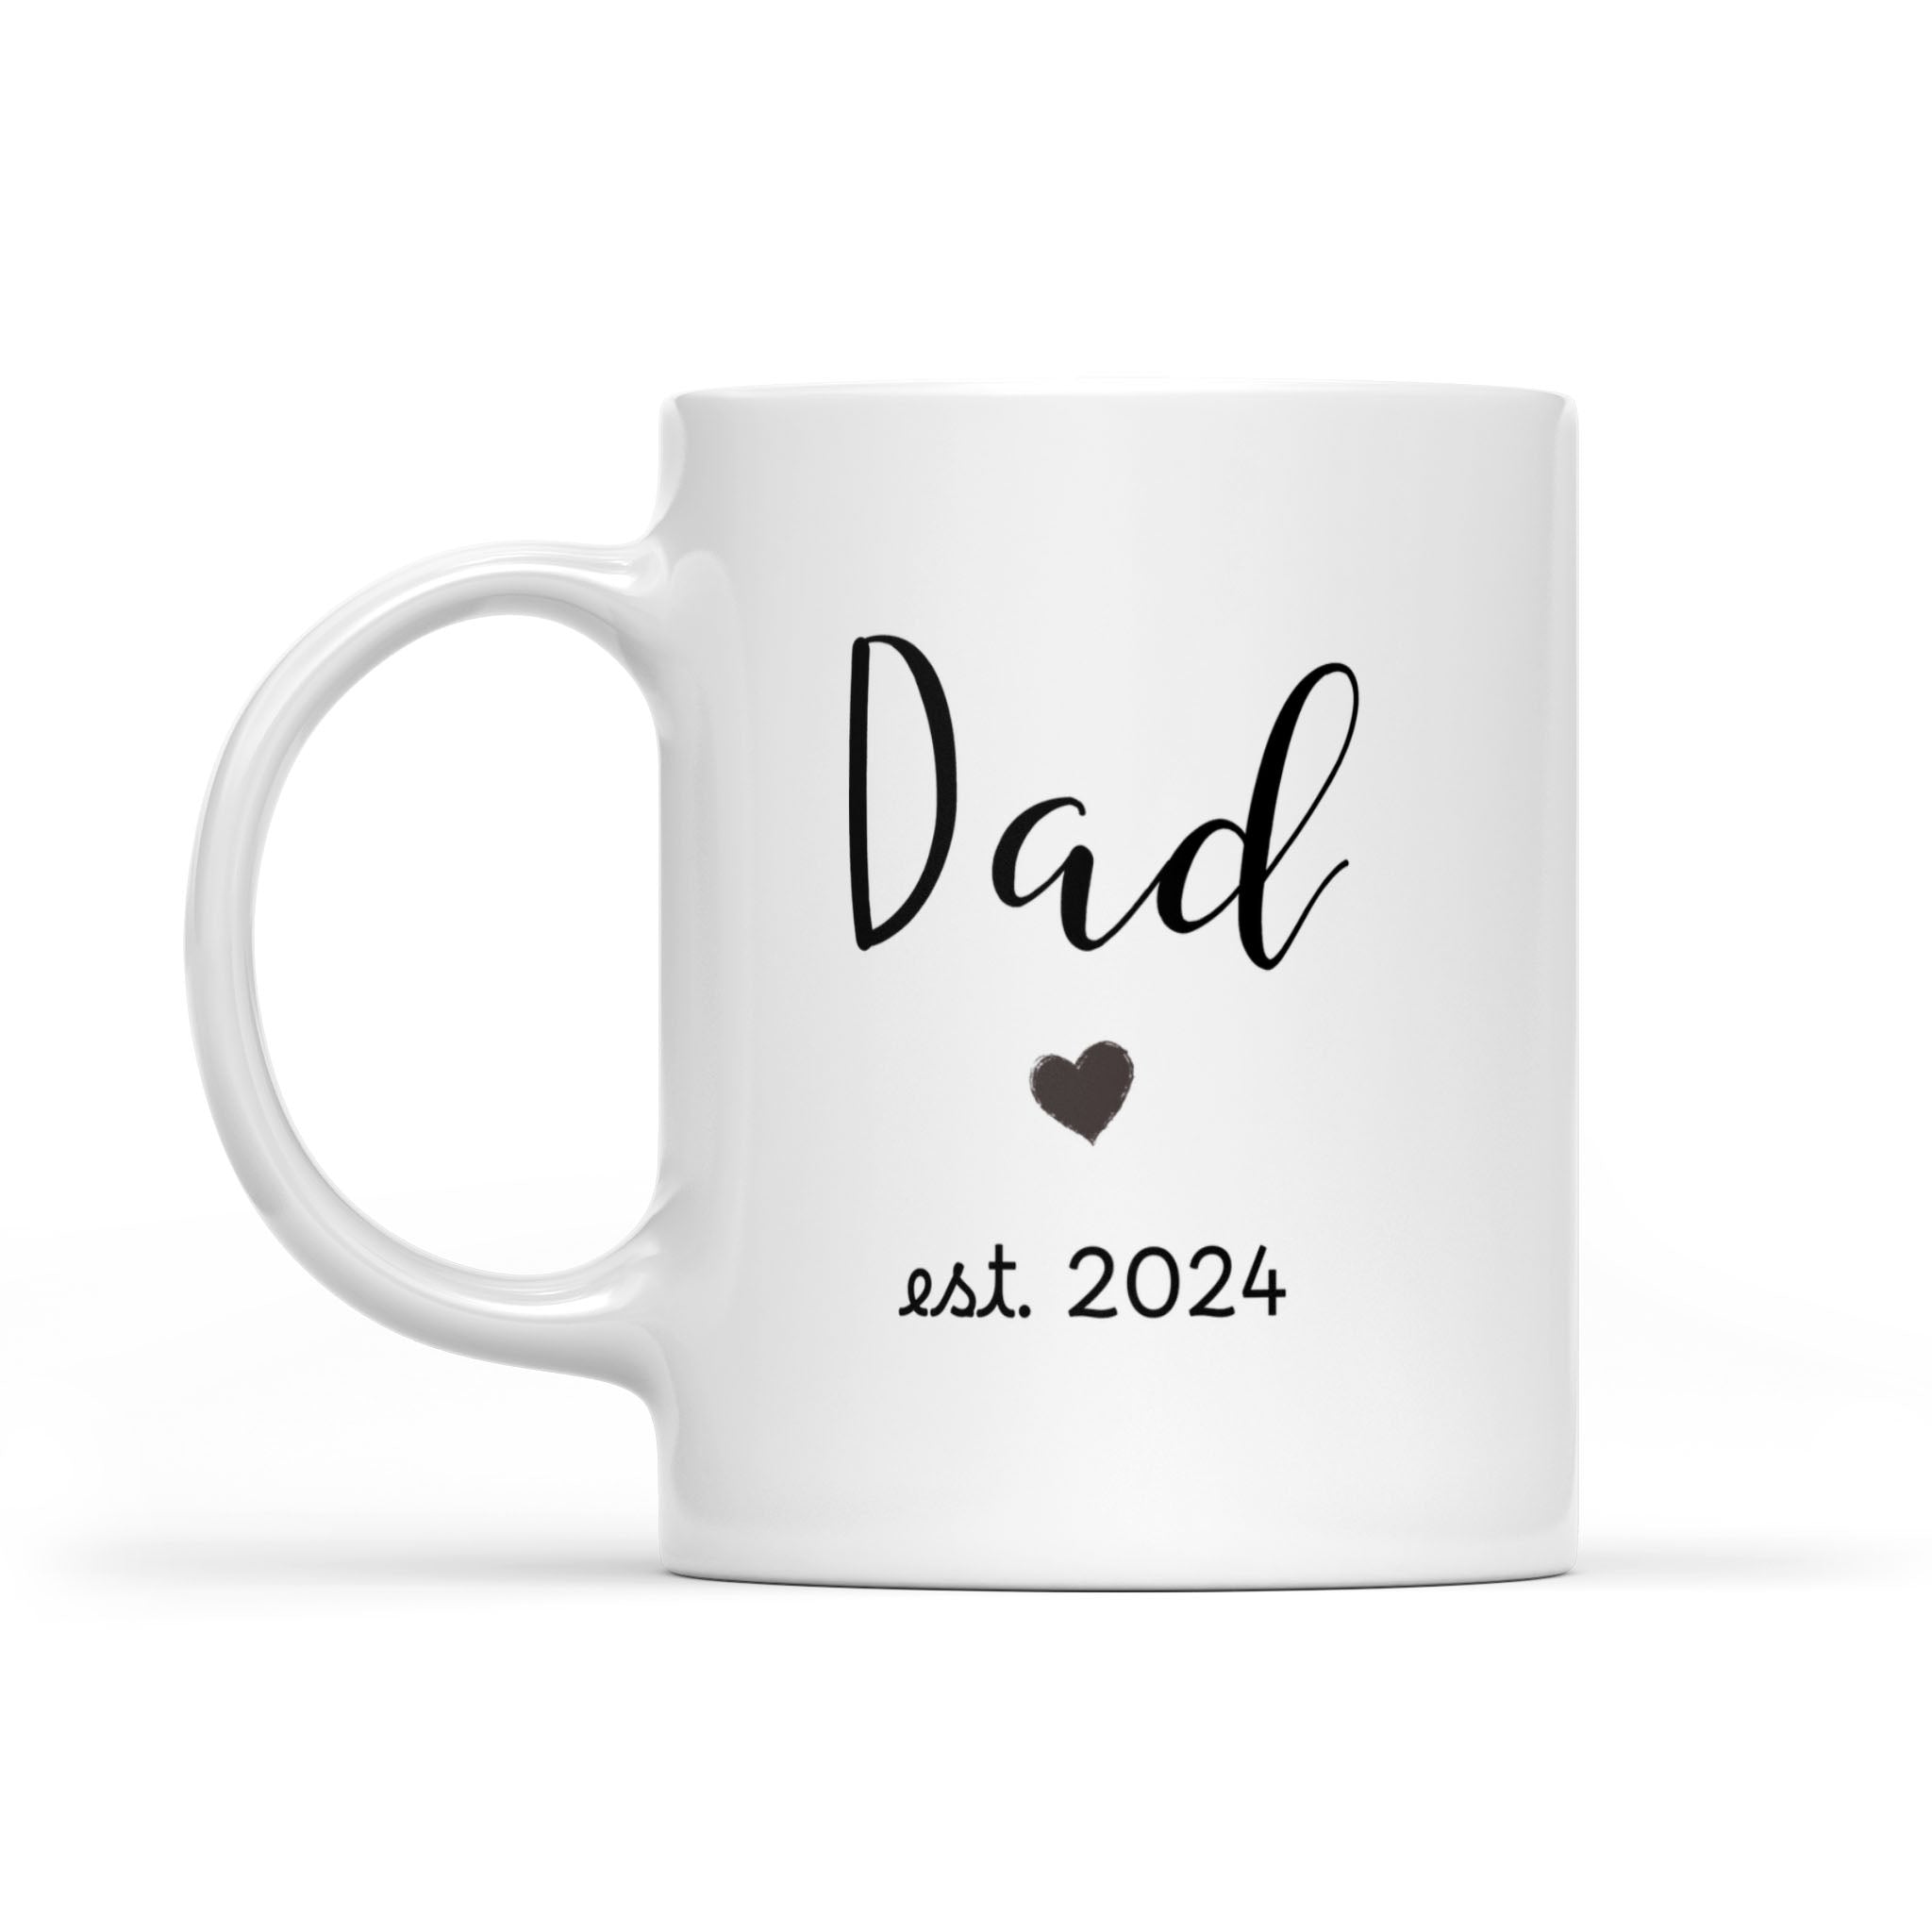 Dad Est 2024 Coffee Mug Grey Heart Design Gender Reveal Gift, Couple, New Bab